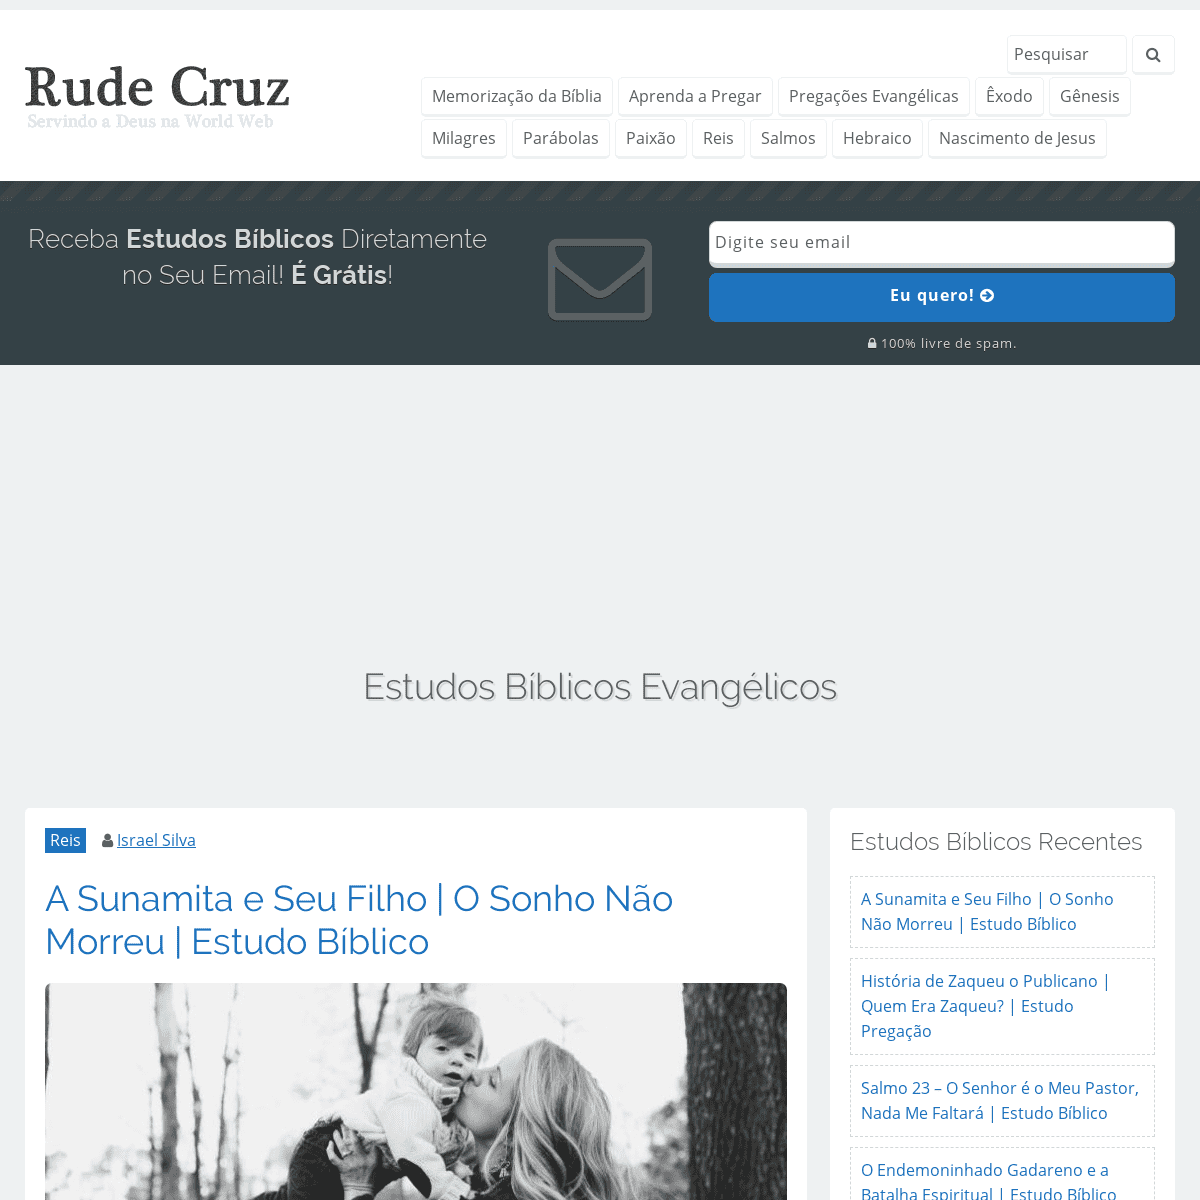 A complete backup of rudecruz.com